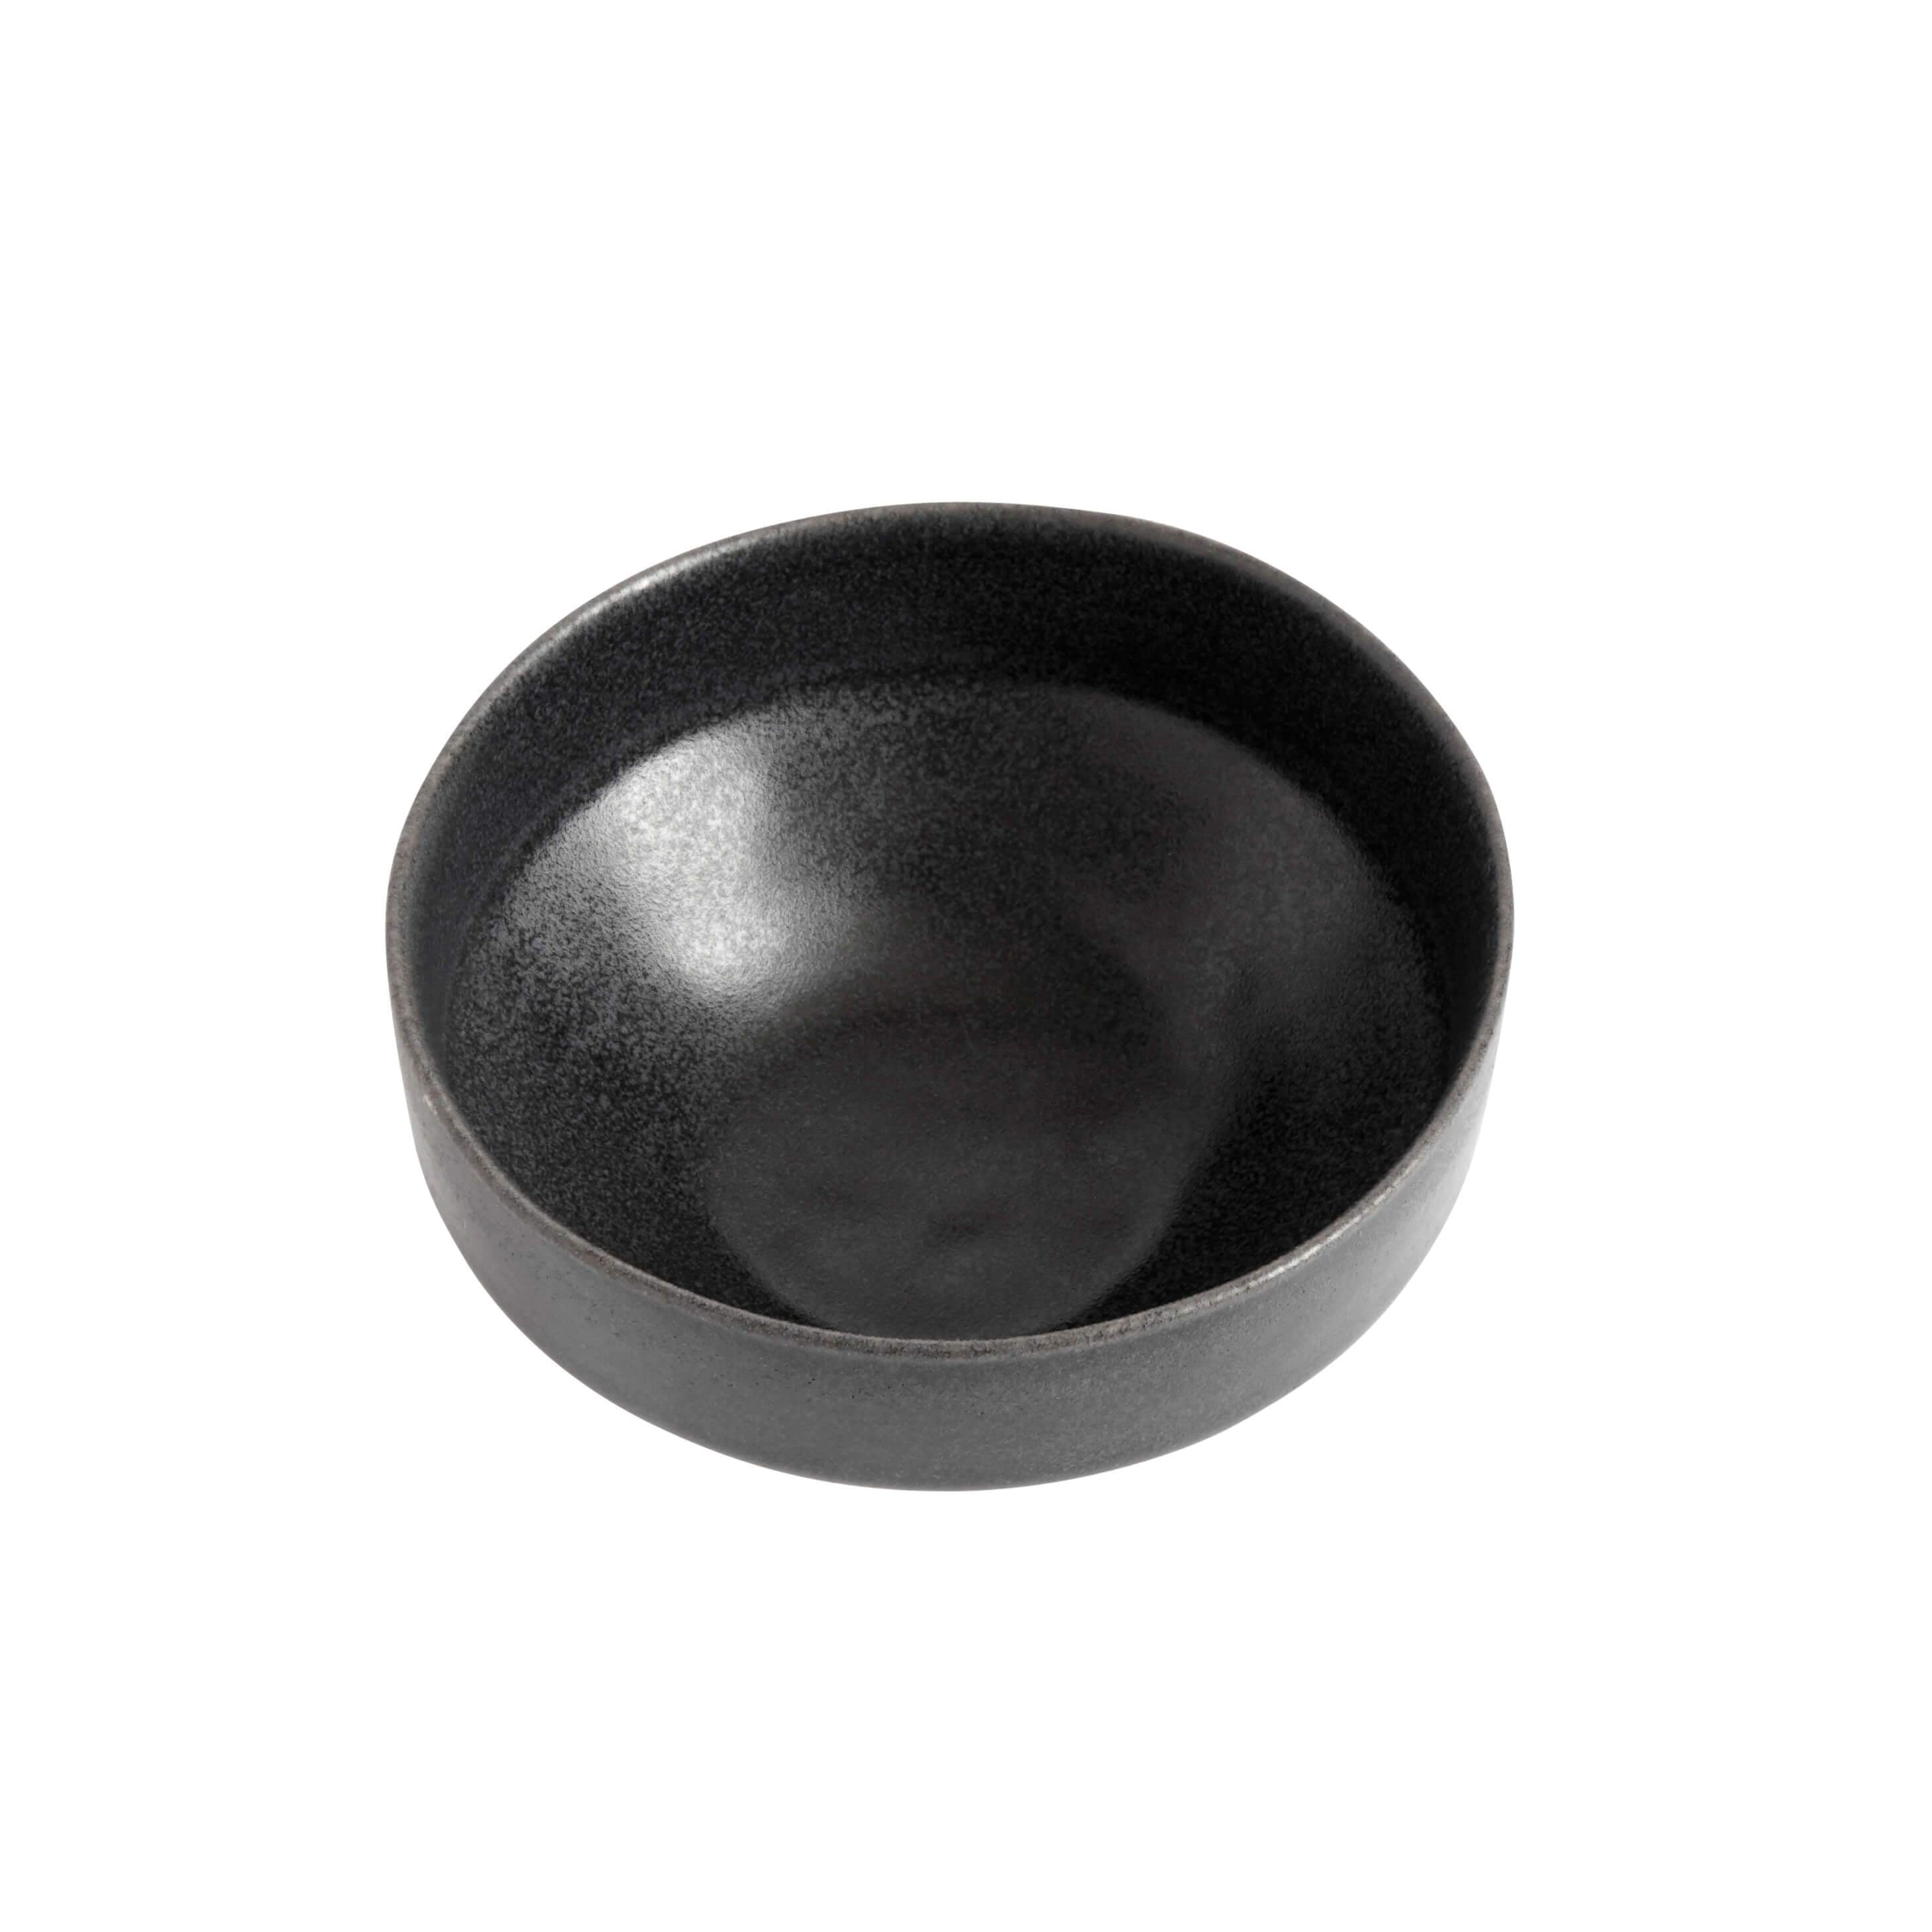 Muubs Ceto Dip Bowl Black, 11cm